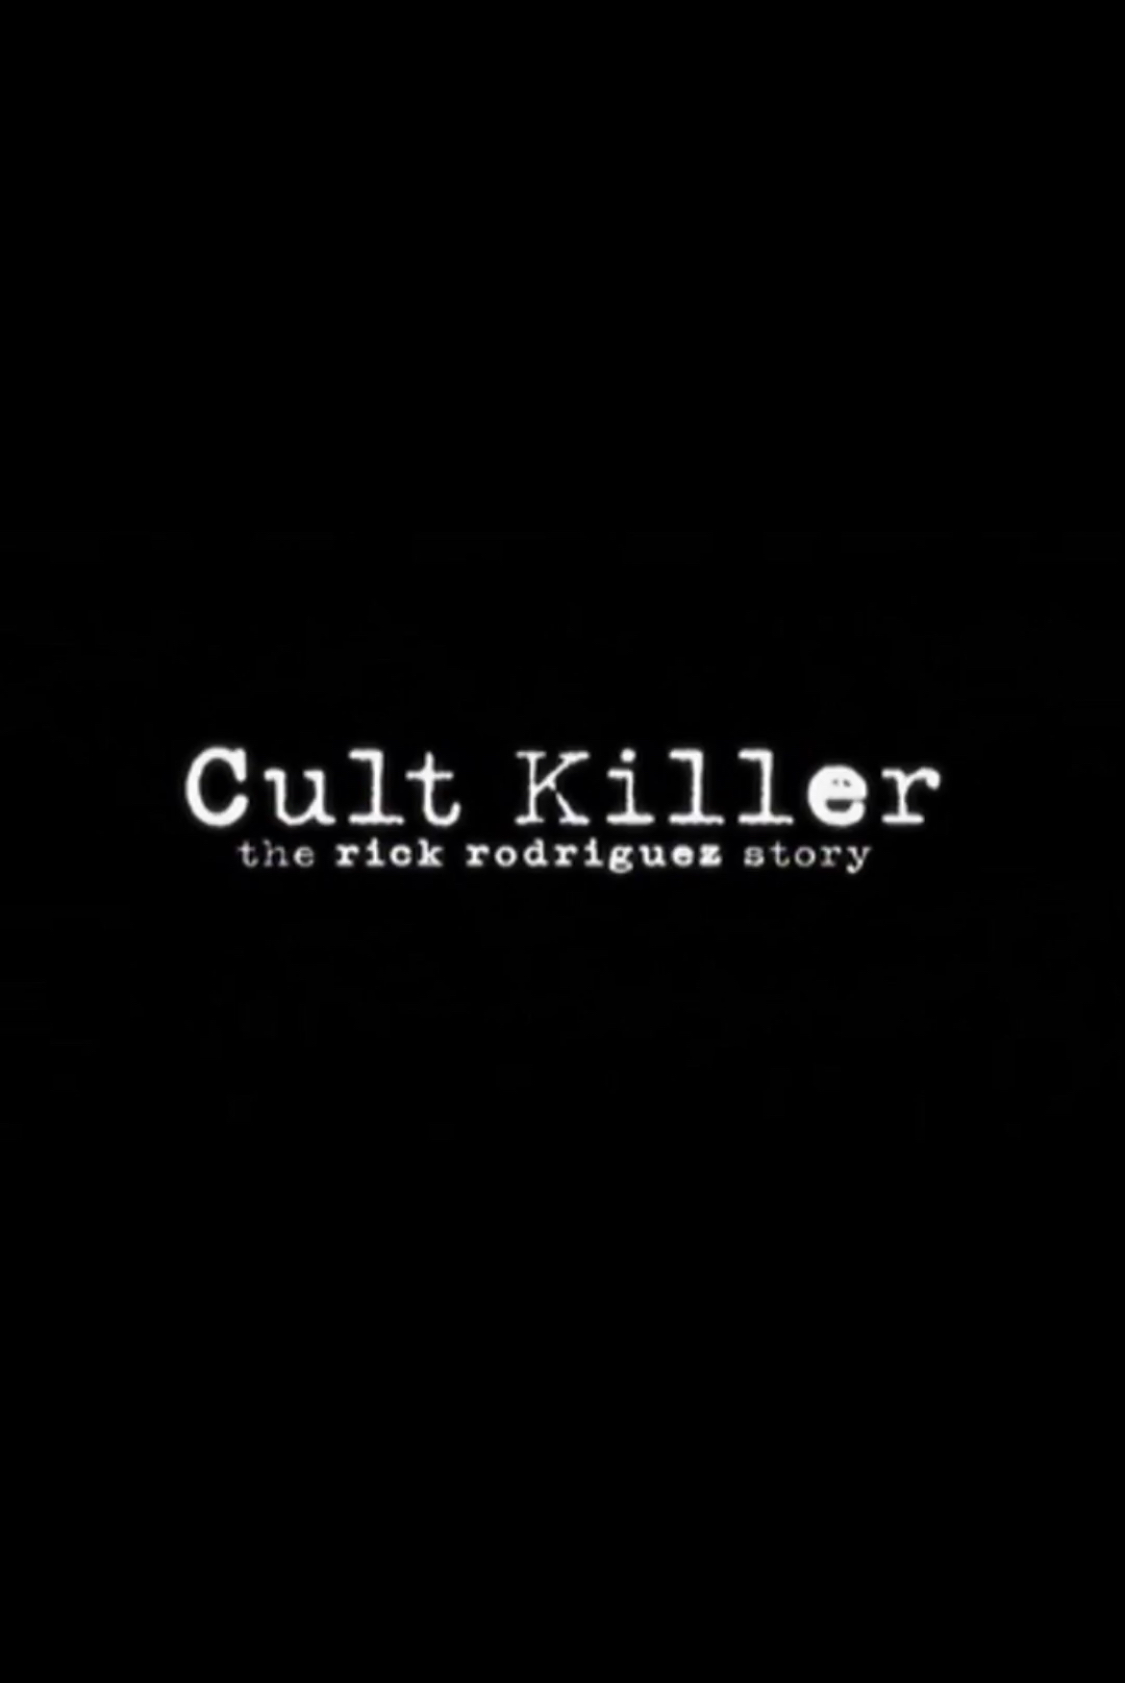 Cult Killer: The Story of Rick Rodriguez (2006) Screenshot 1